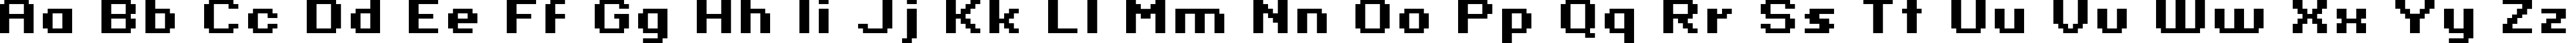 Пример написания английского алфавита шрифтом standard 07_64